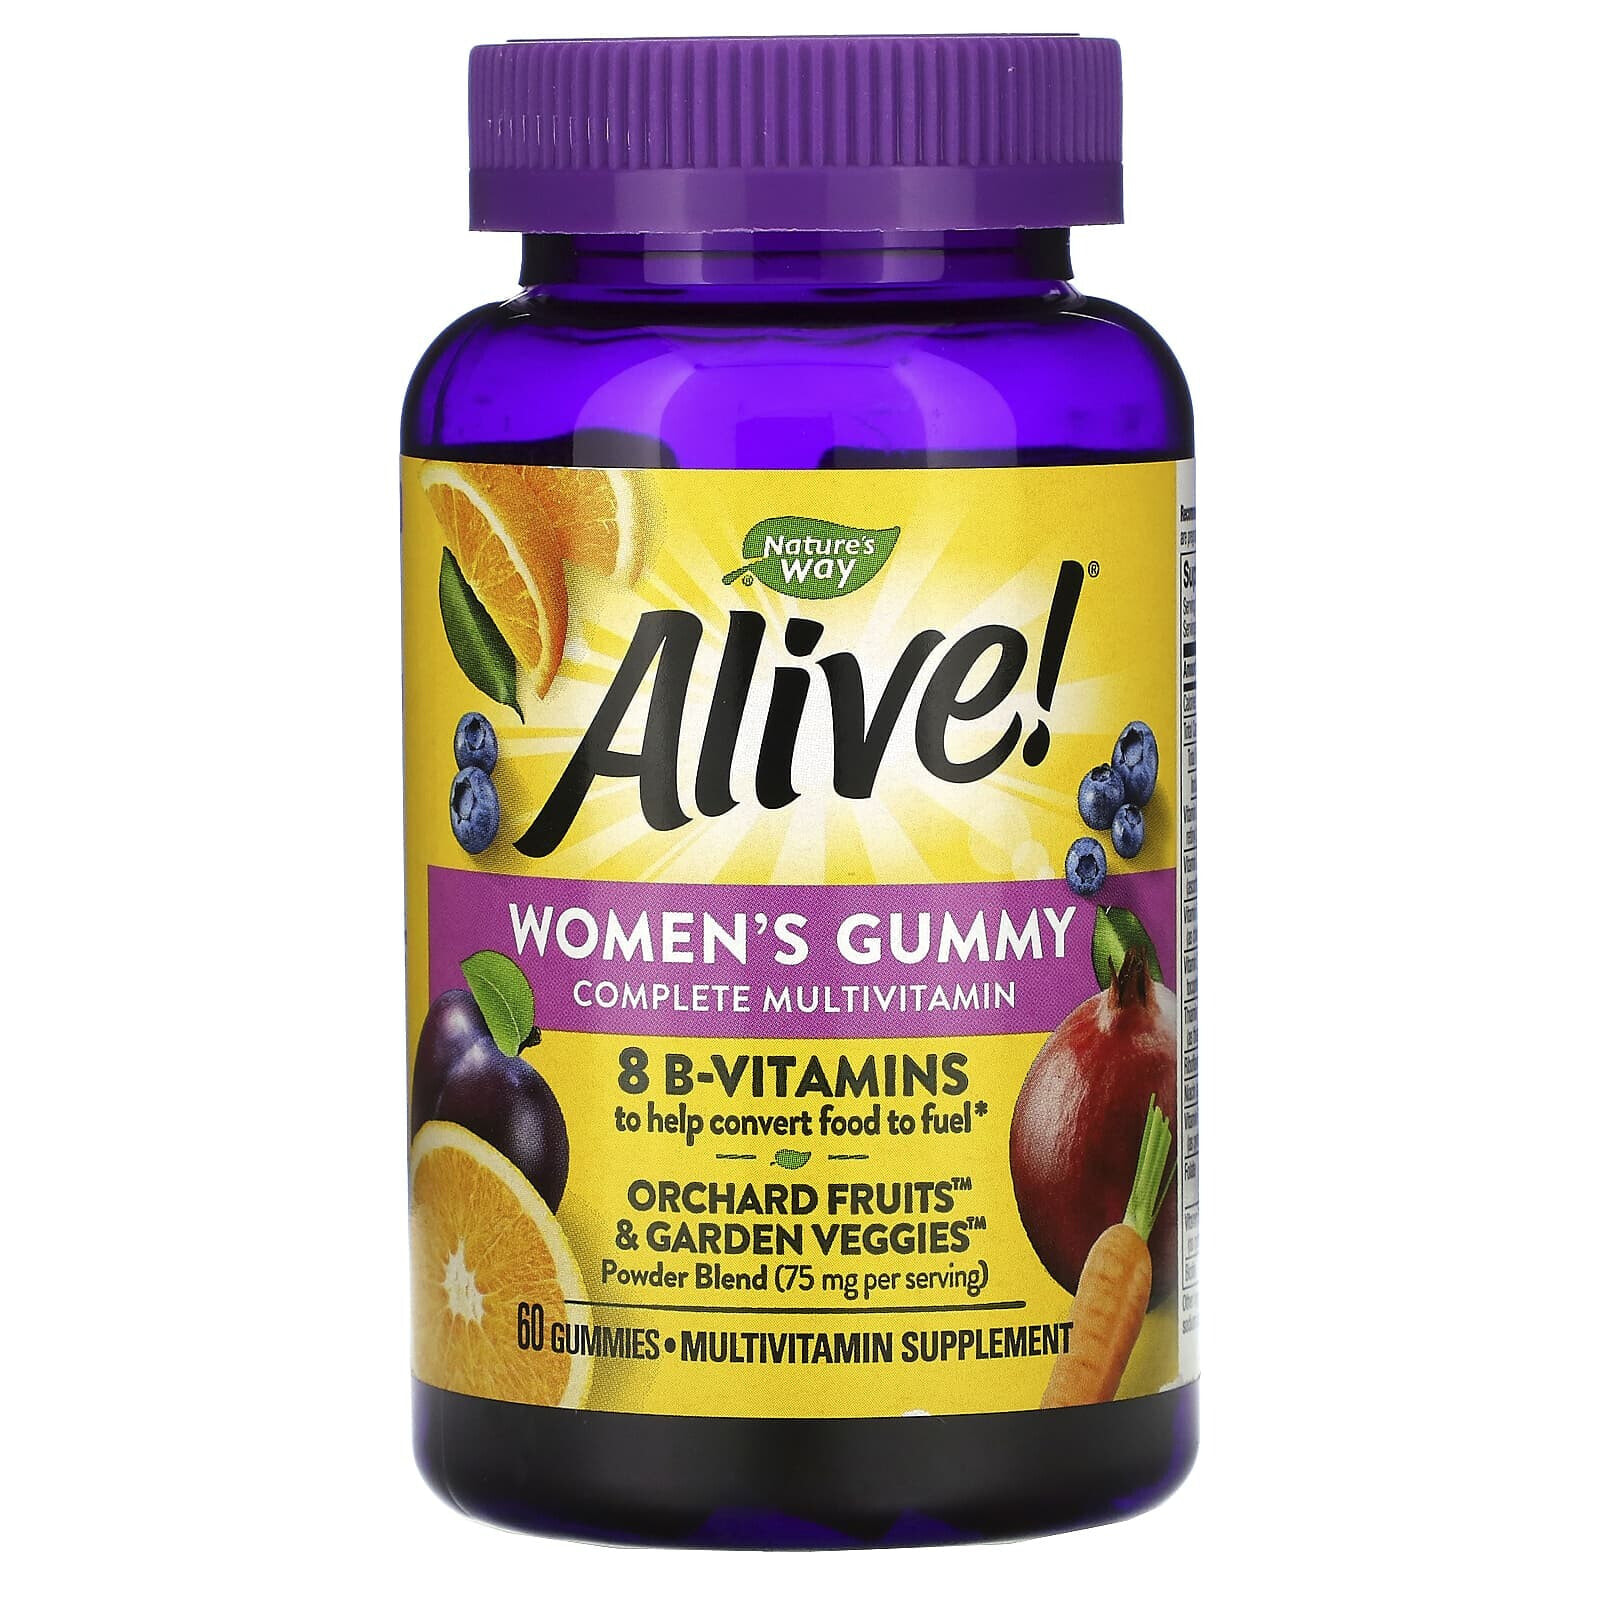 Alive! Women's Gummy Complete Multivitamin, Mixed Berry, 130 Gummies